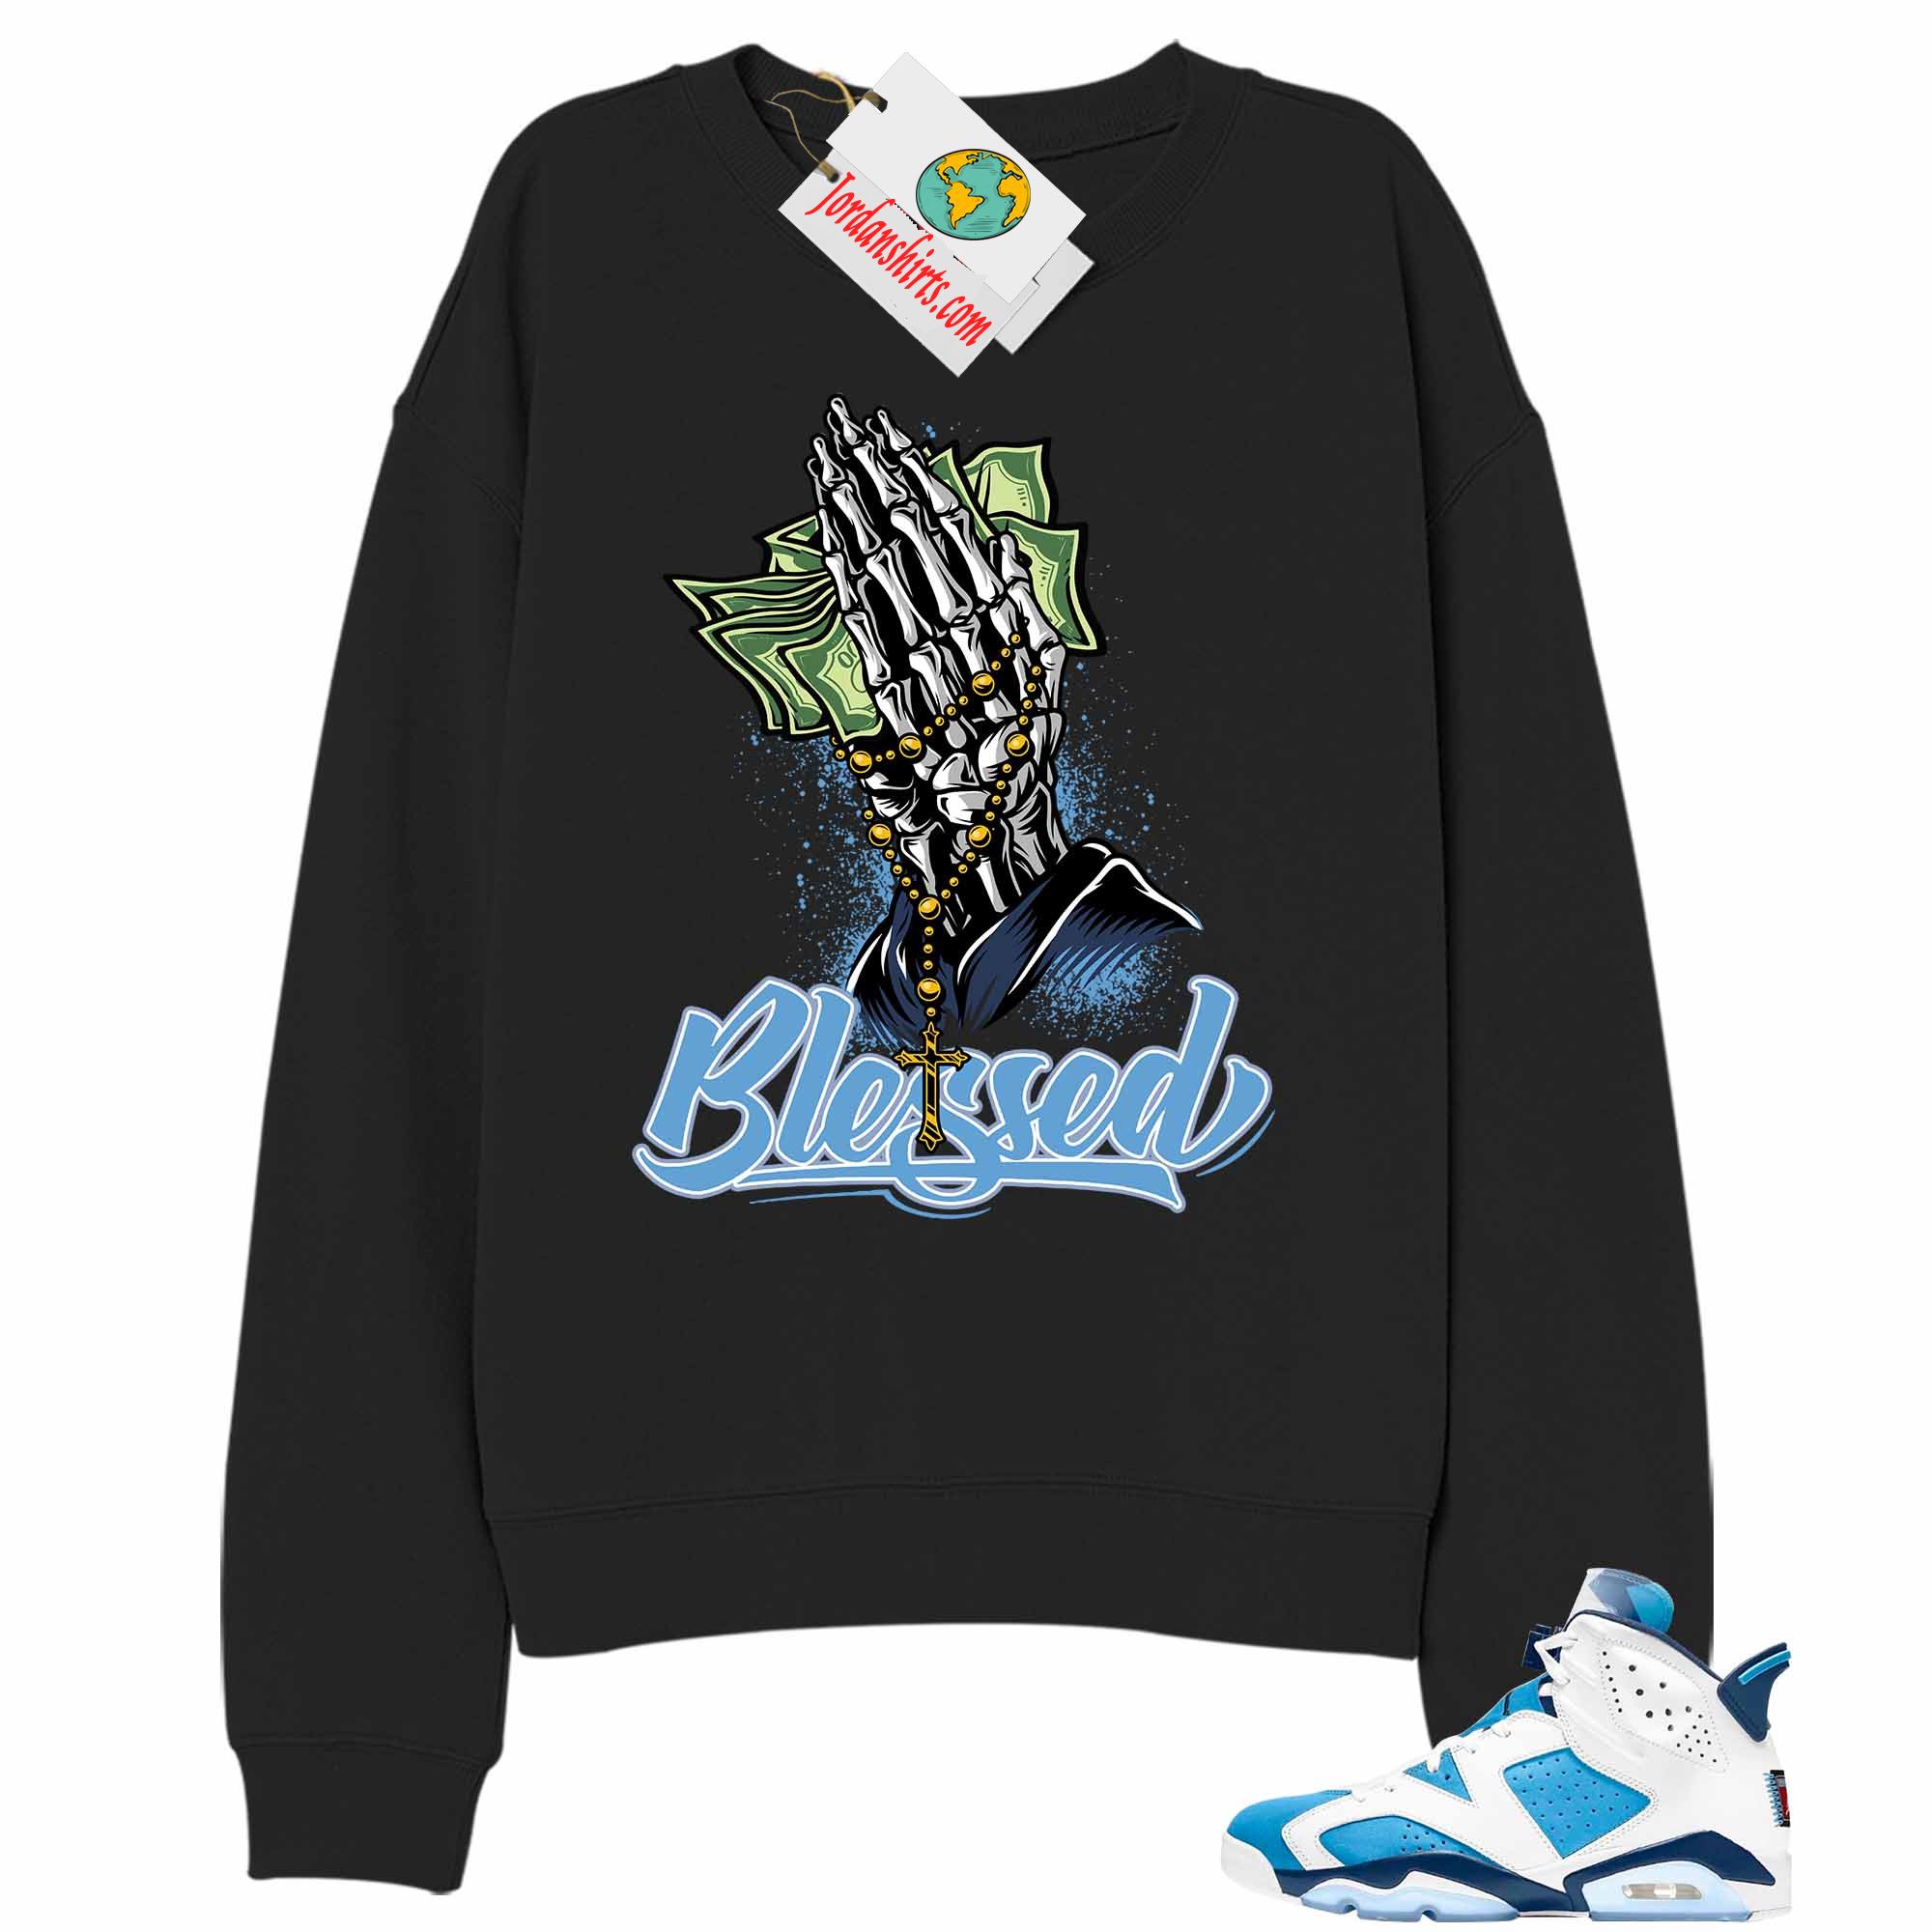 Jordan 6 Sweatshirt, Blessed Pray Hand Money Black Sweatshirt Air Jordan 6 Unc 6s Plus Size Up To 5xl